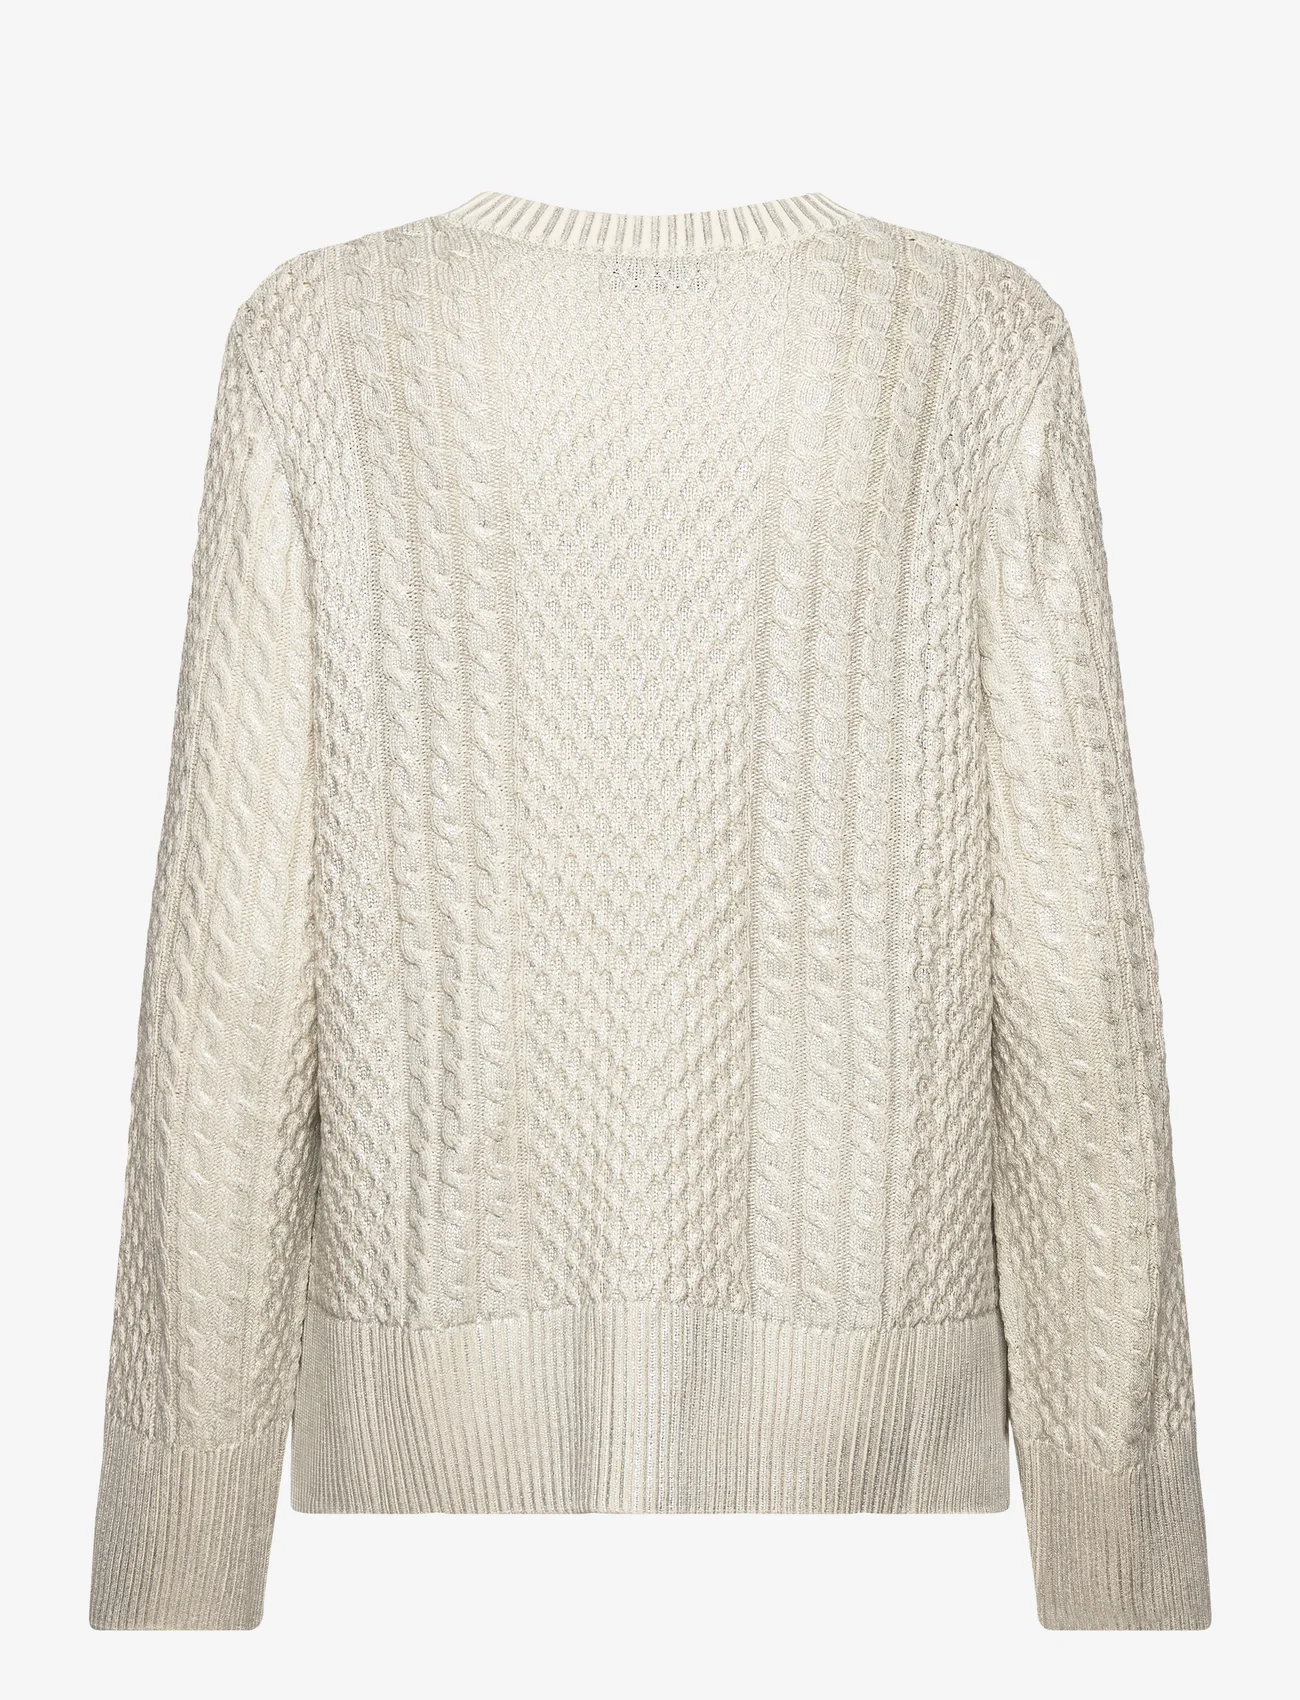 Malina - Lune cable knitted metallic sweater - neulepuserot - silver - 1